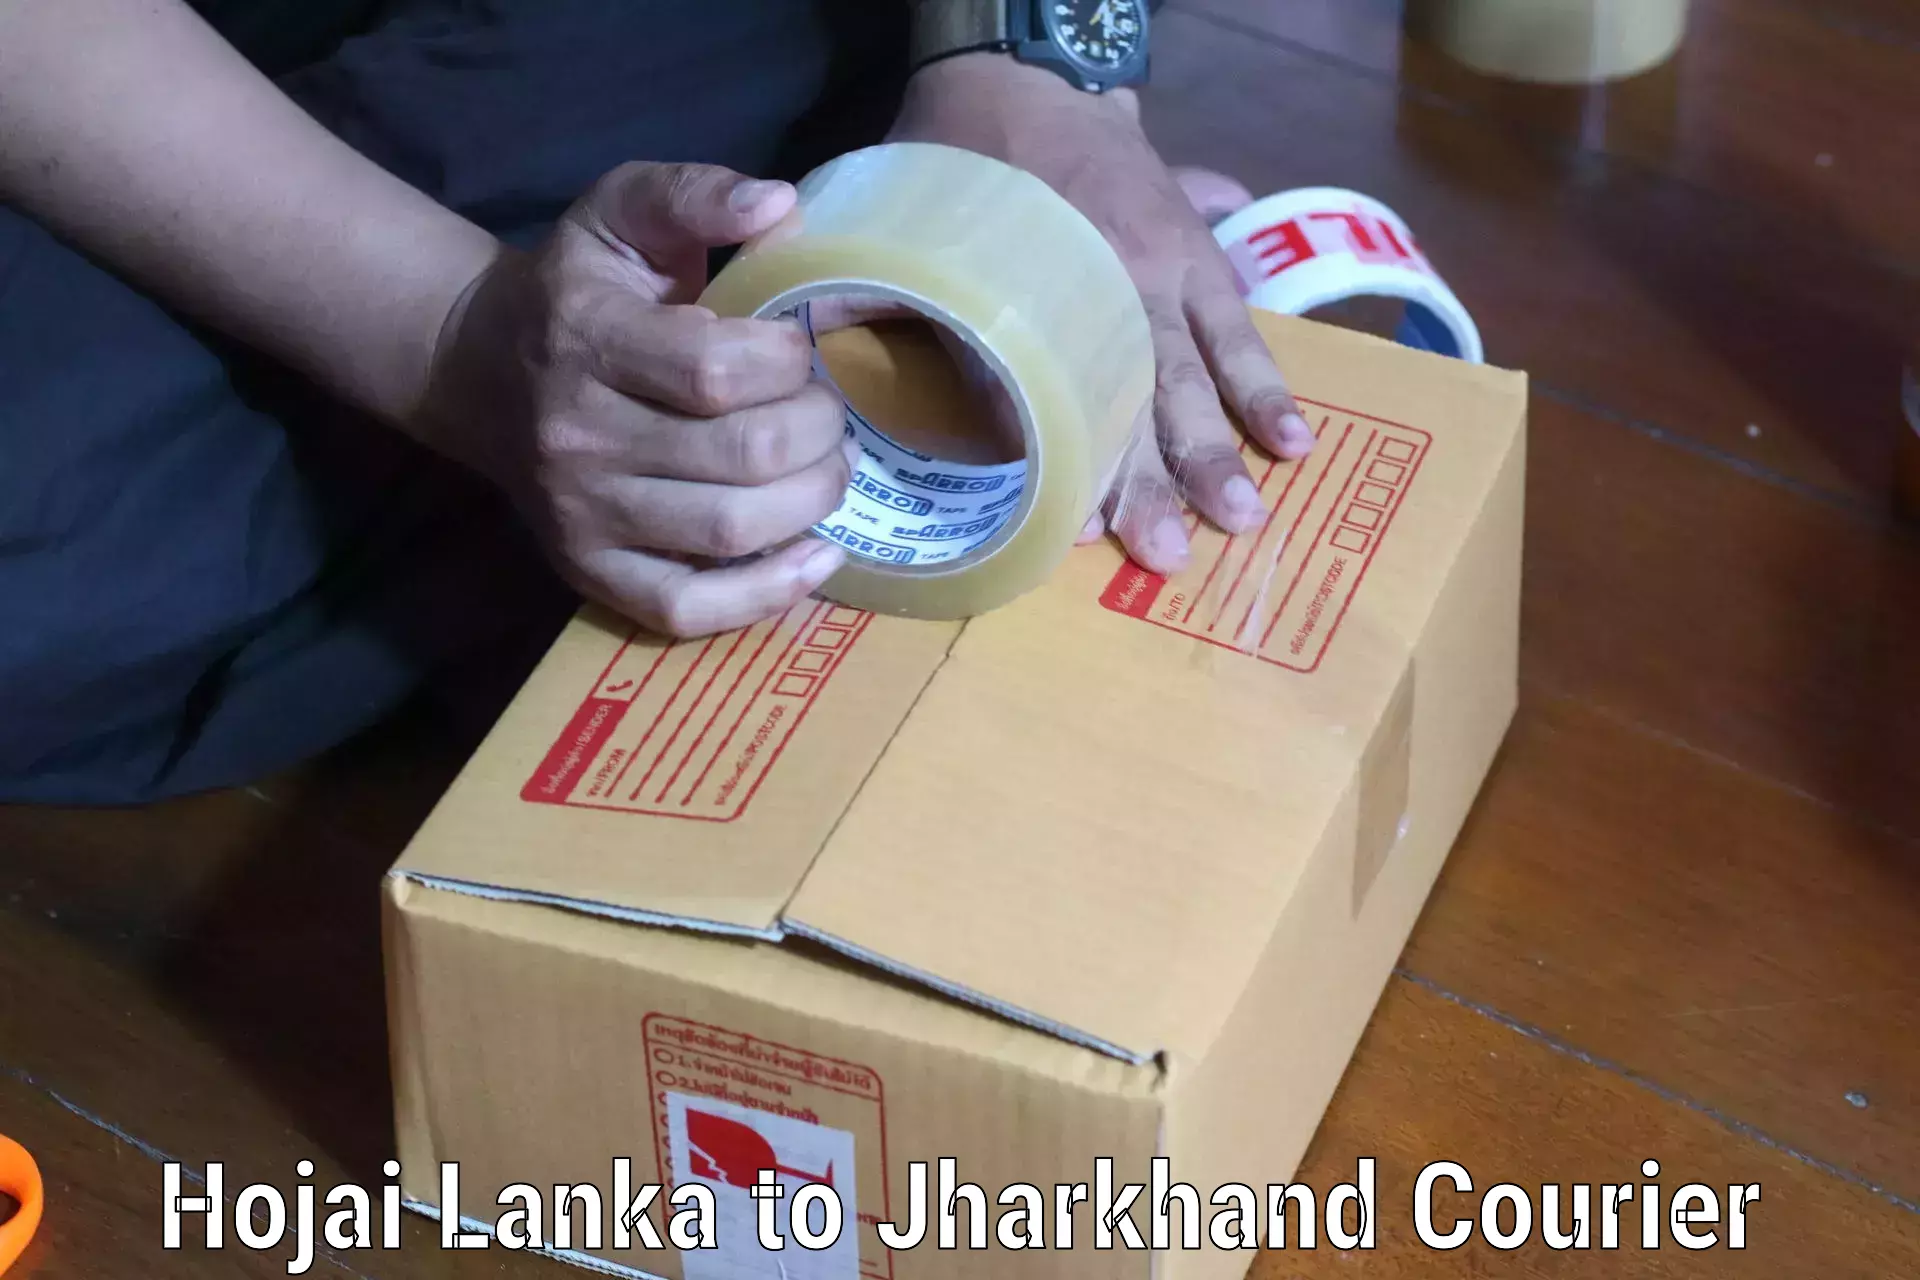 Punctual parcel services Hojai Lanka to Seraikella